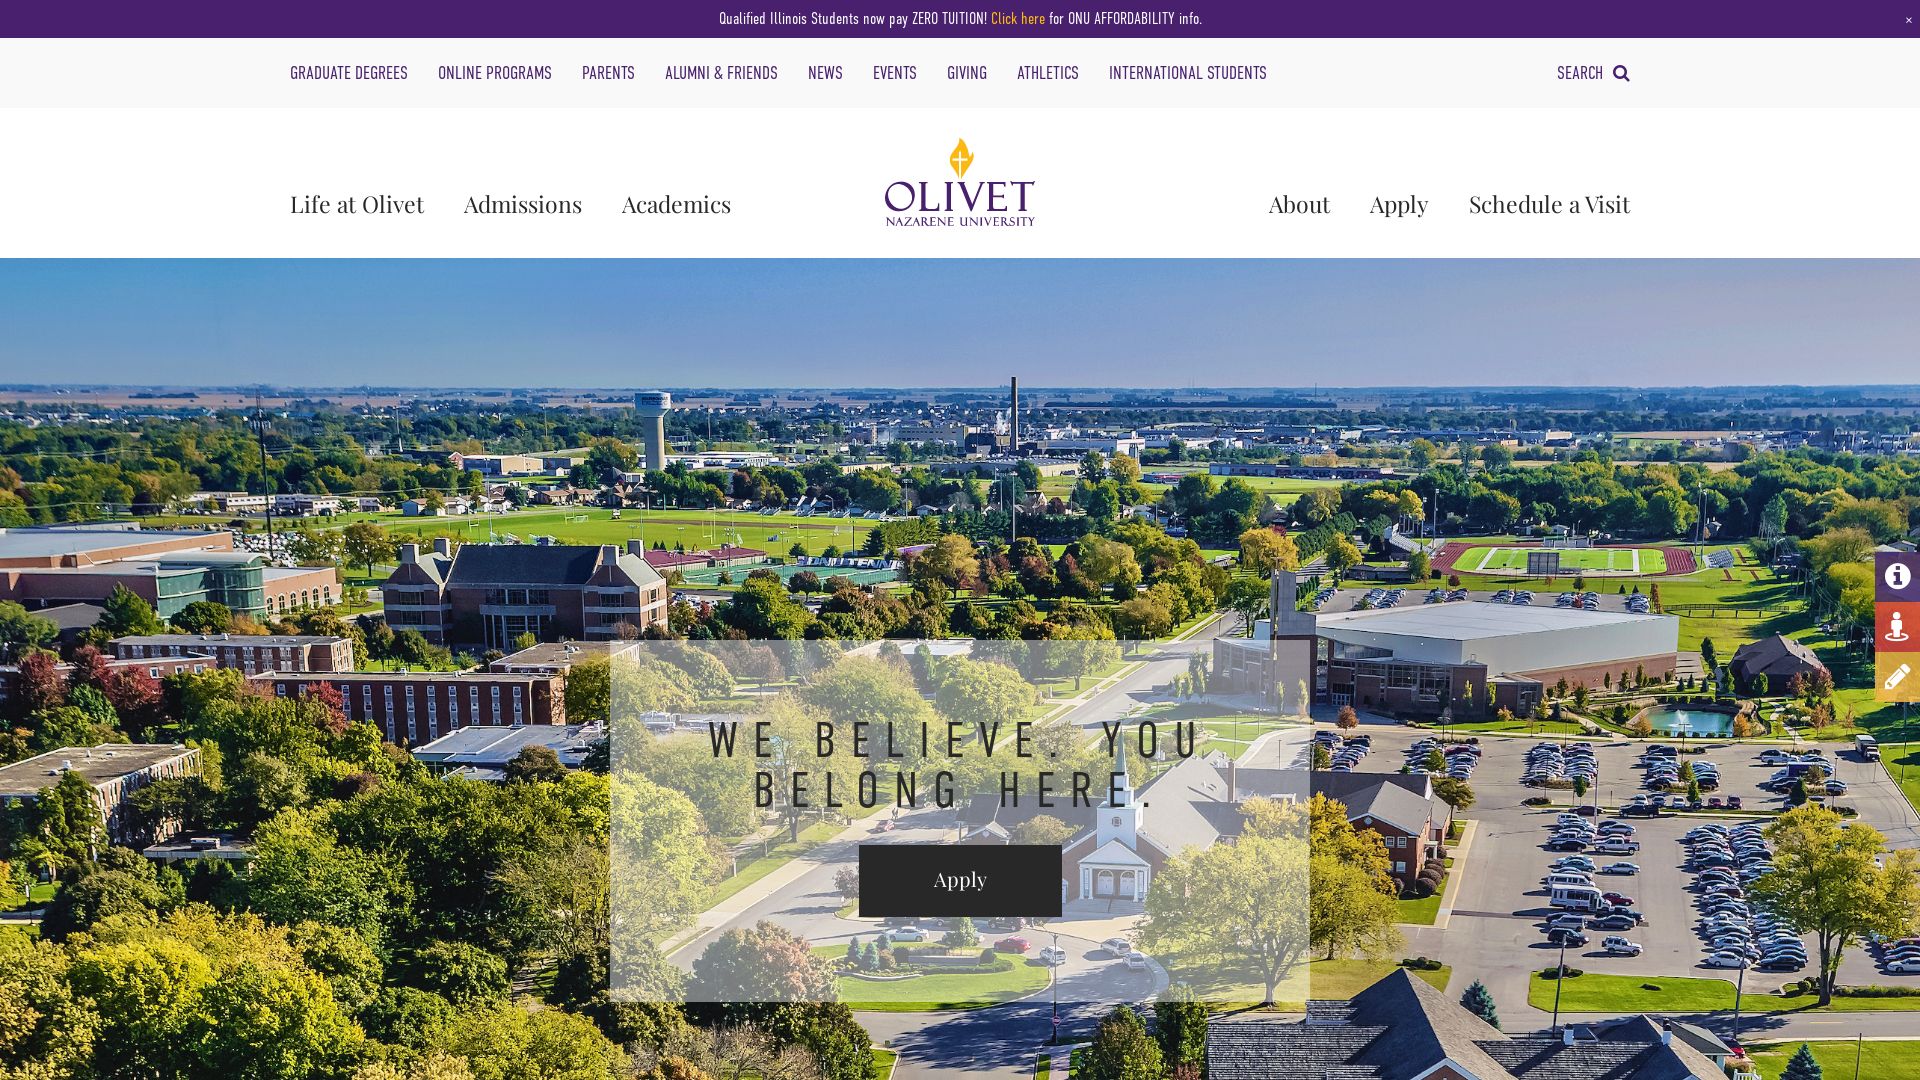 Stato del sito web olivet.edu è   ONLINE